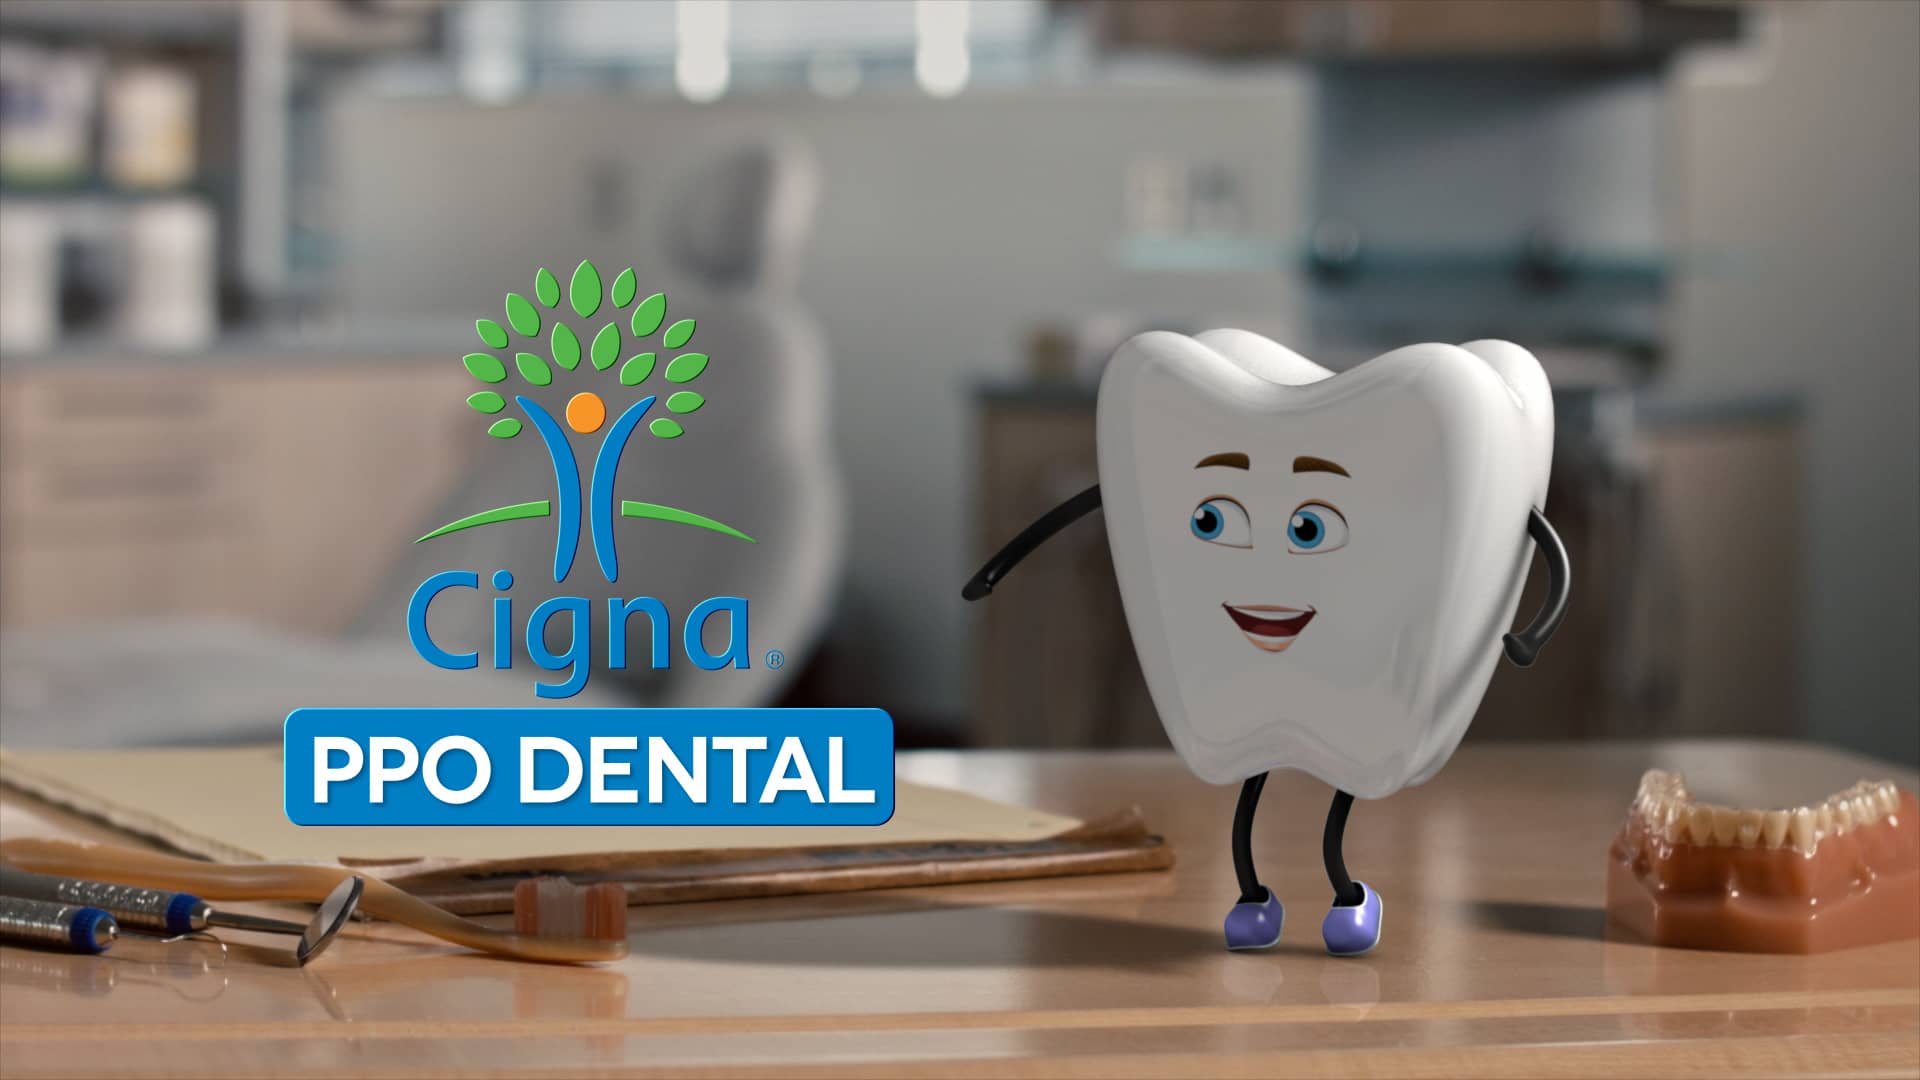 Cigna Dental PPO Plan on Vimeo